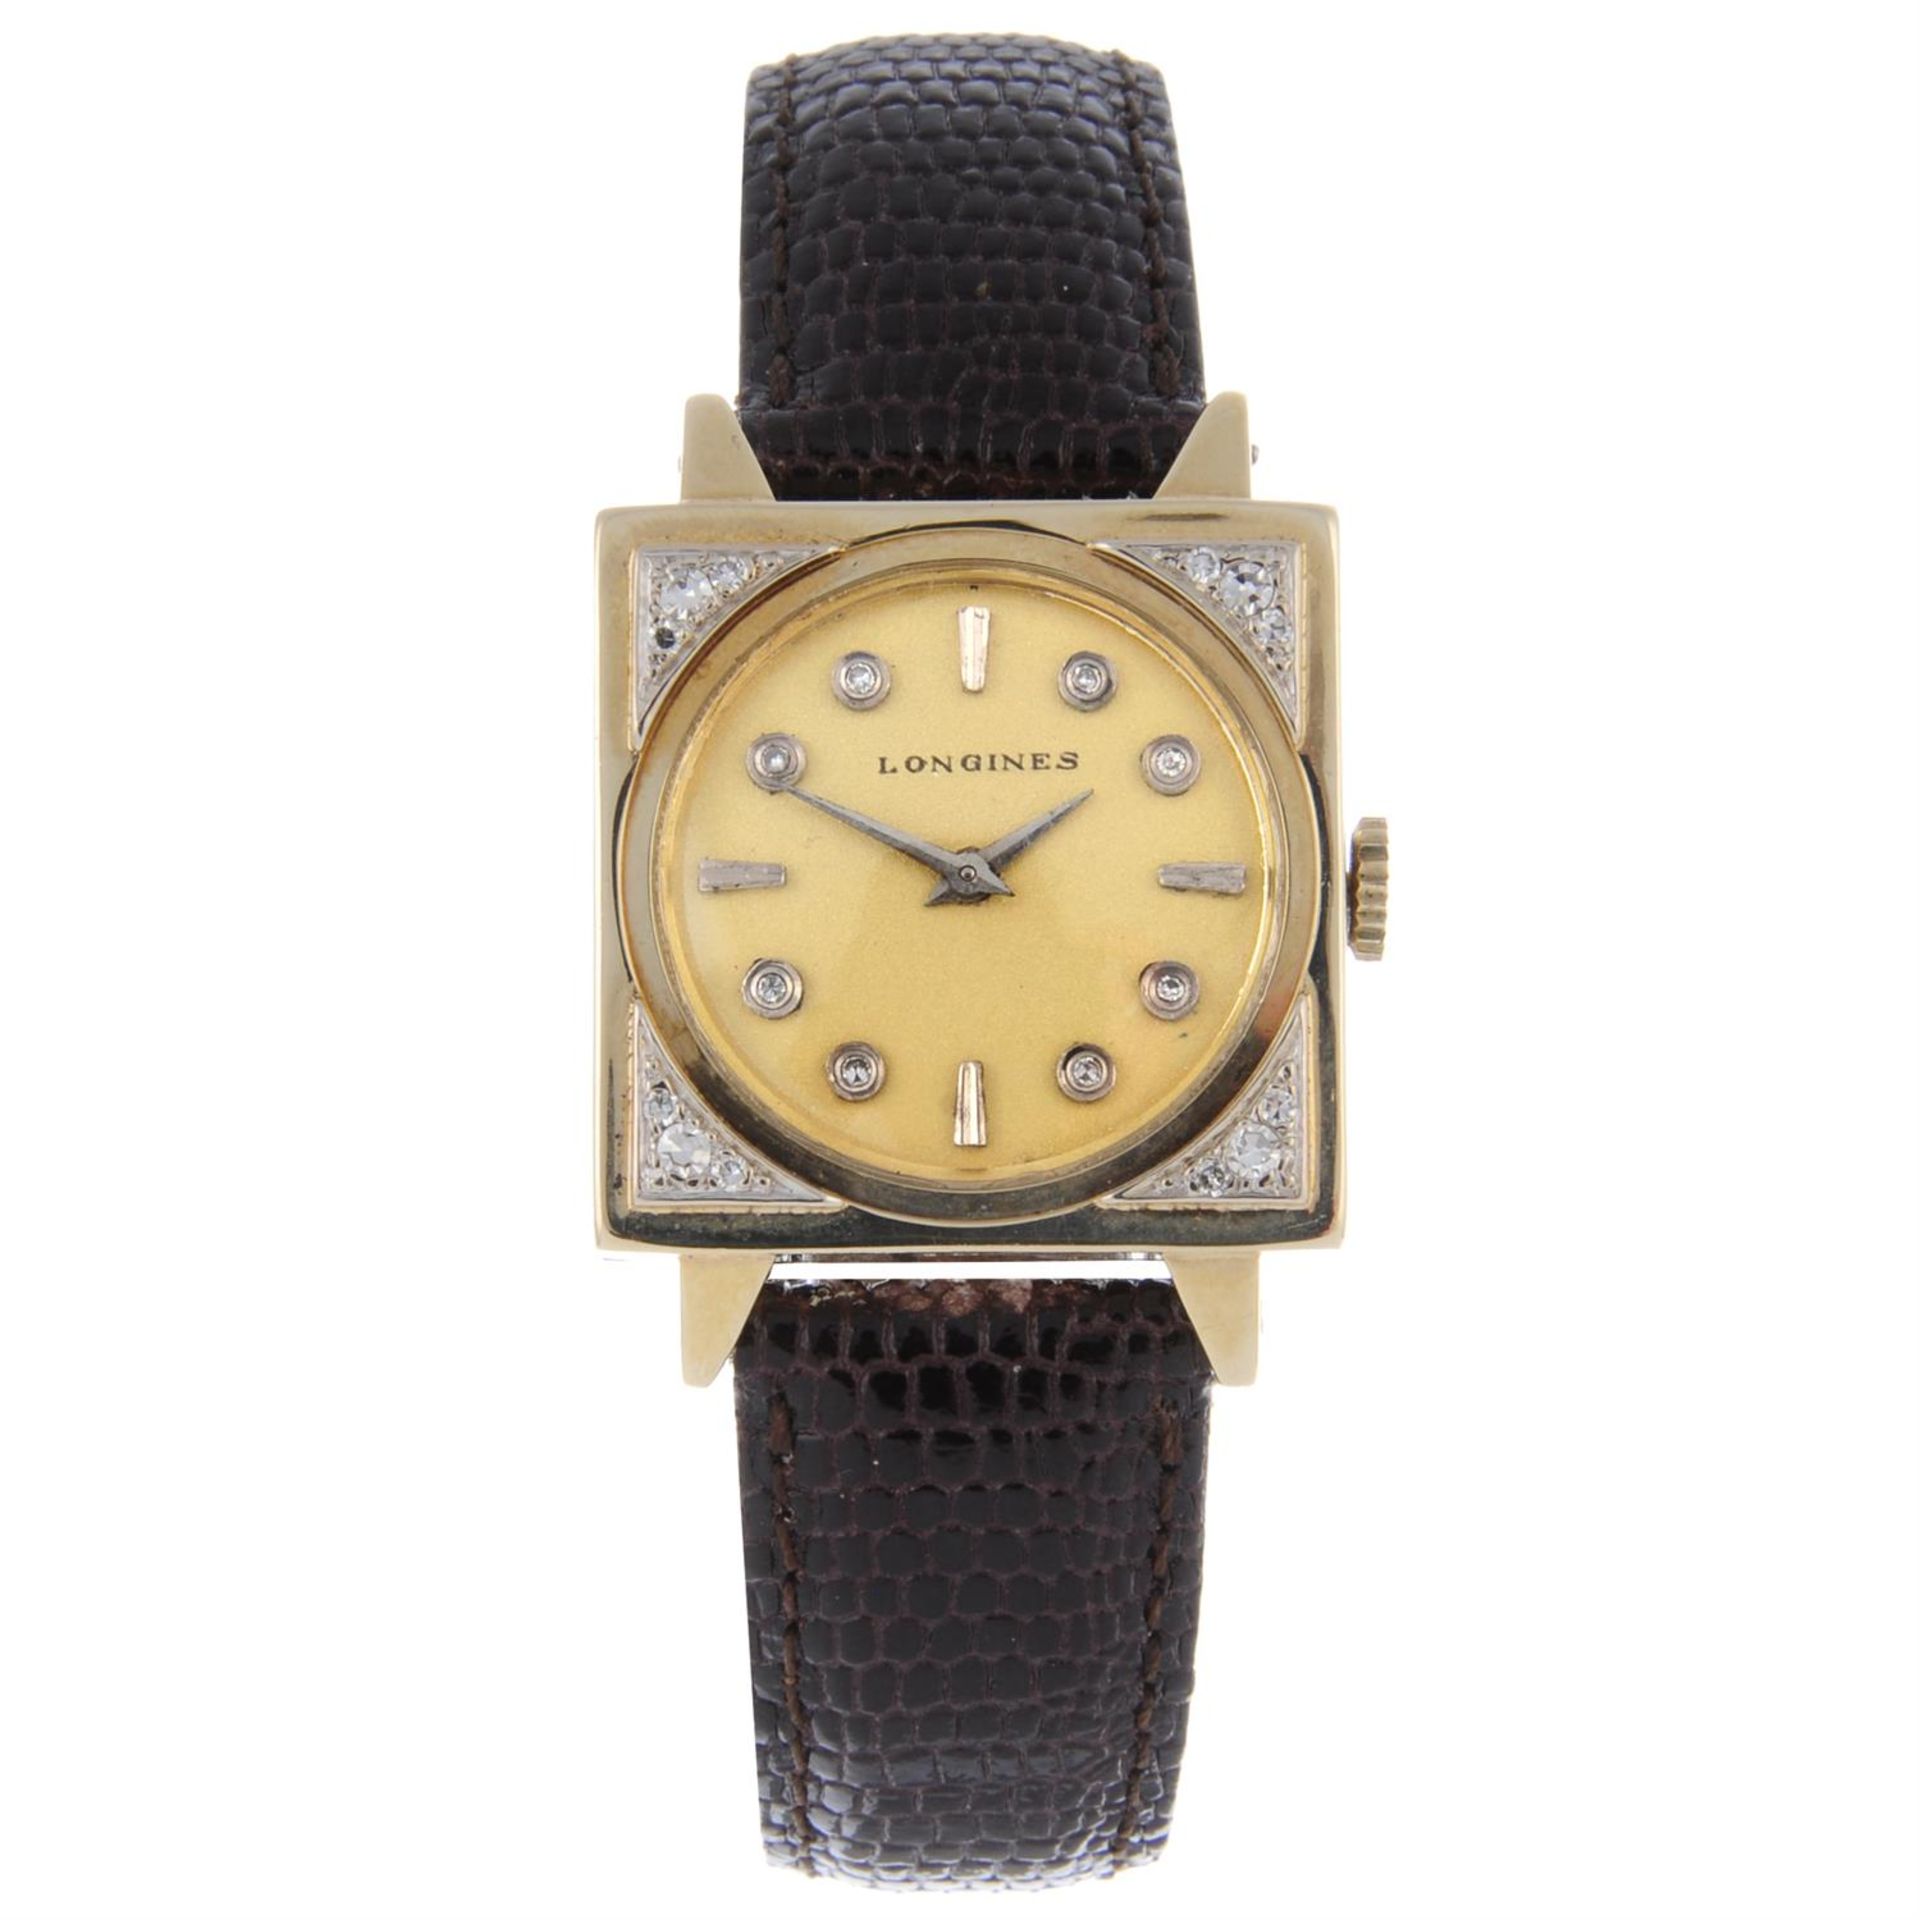 LONGINES - a yellow metal wrist watch, 25mm.